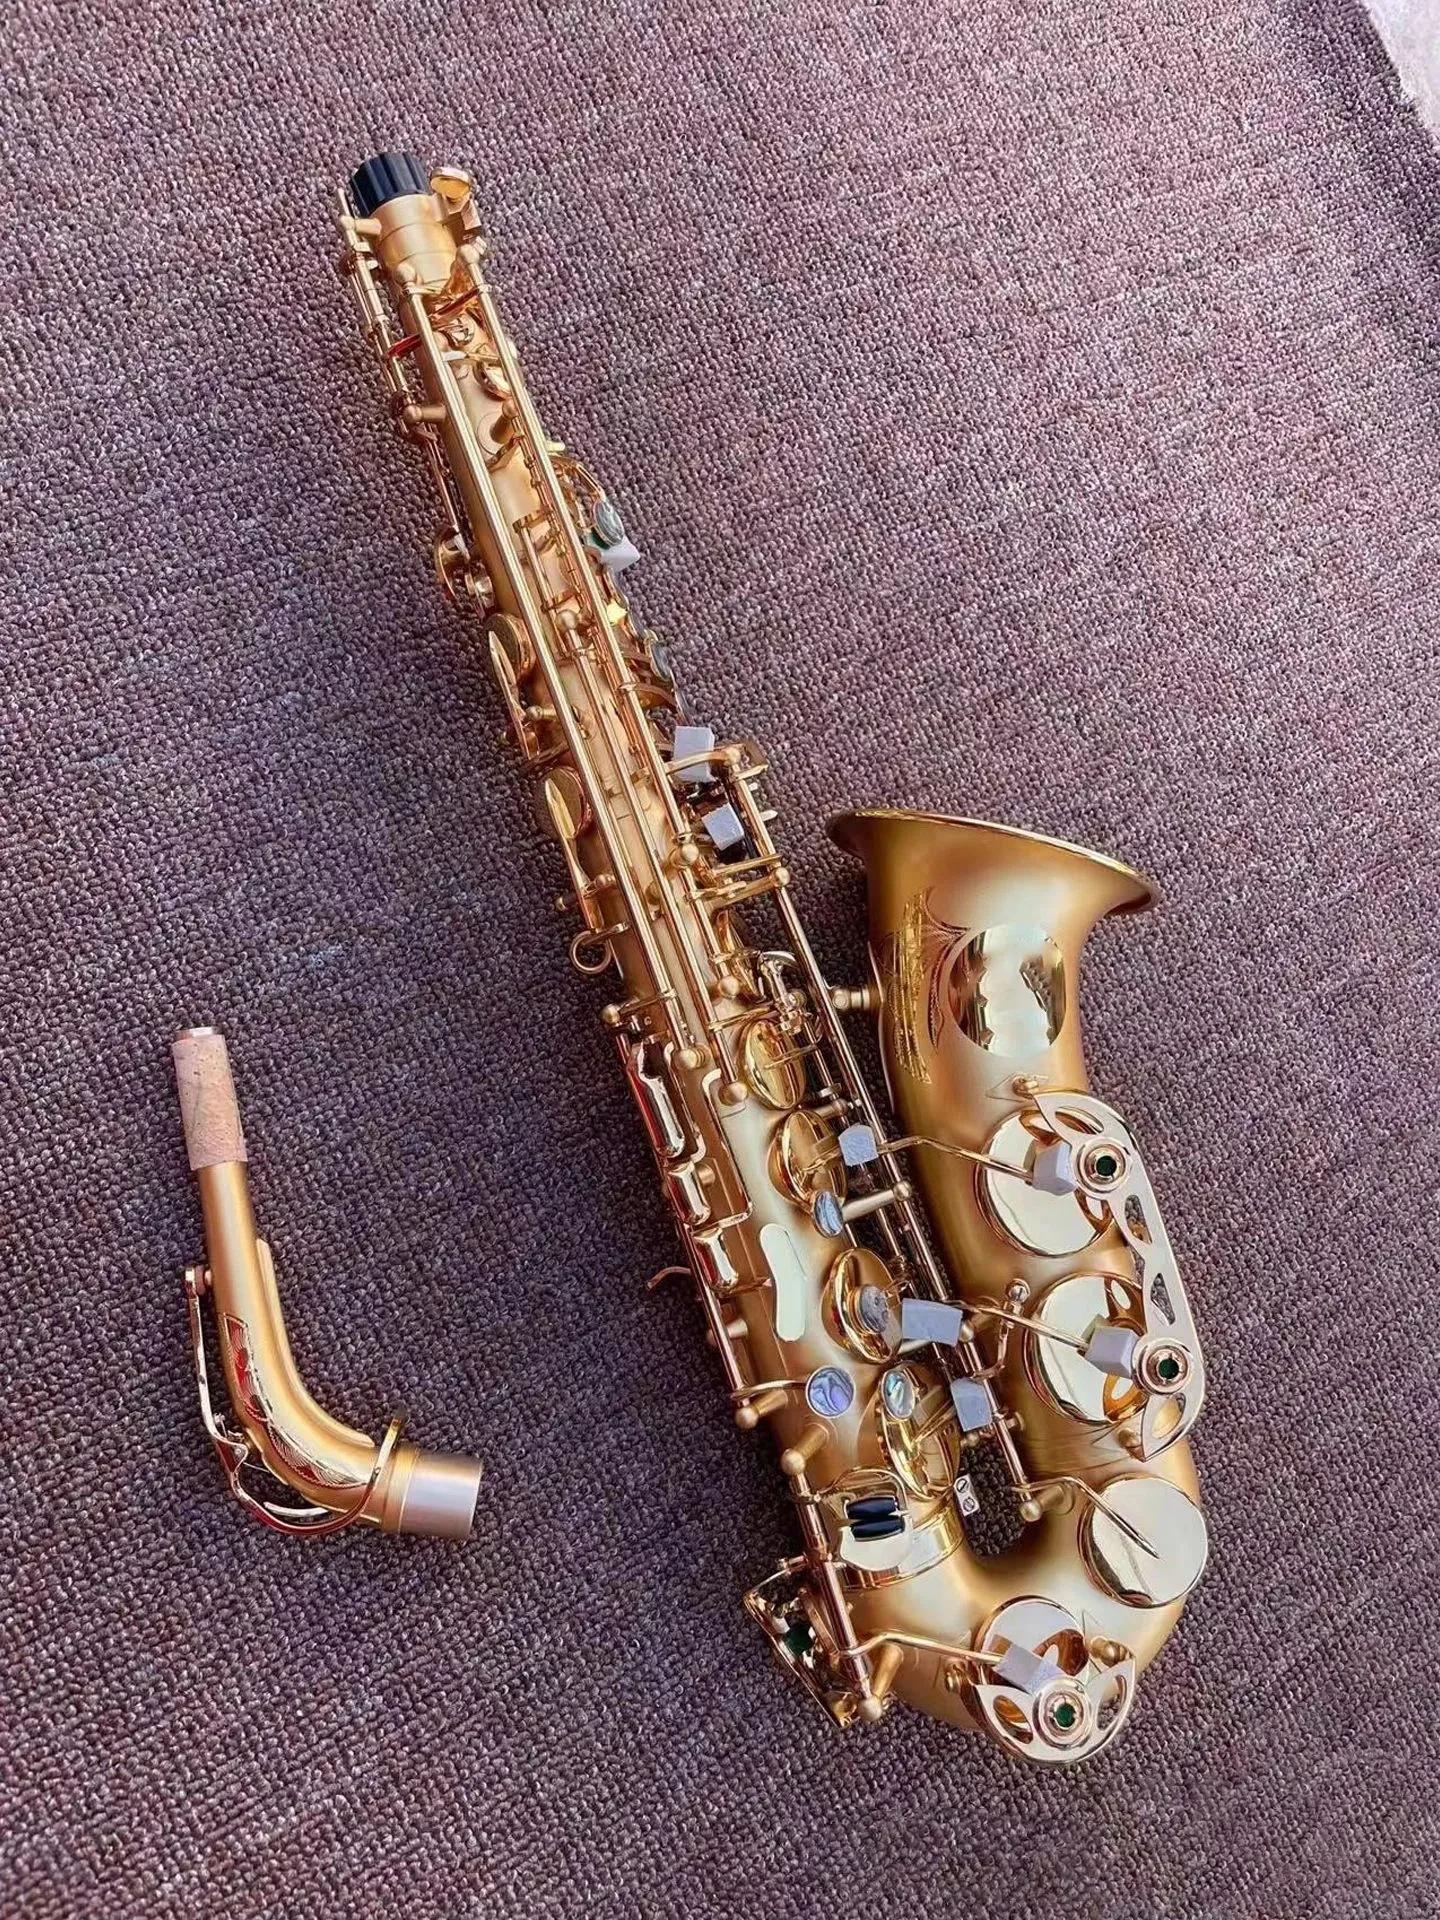 Hamp Gold Professional Alto Saxophone Drop E Tone 54 High-End Pure Gold-Plated Matte Process Alto Saxophone Jazz Instrument